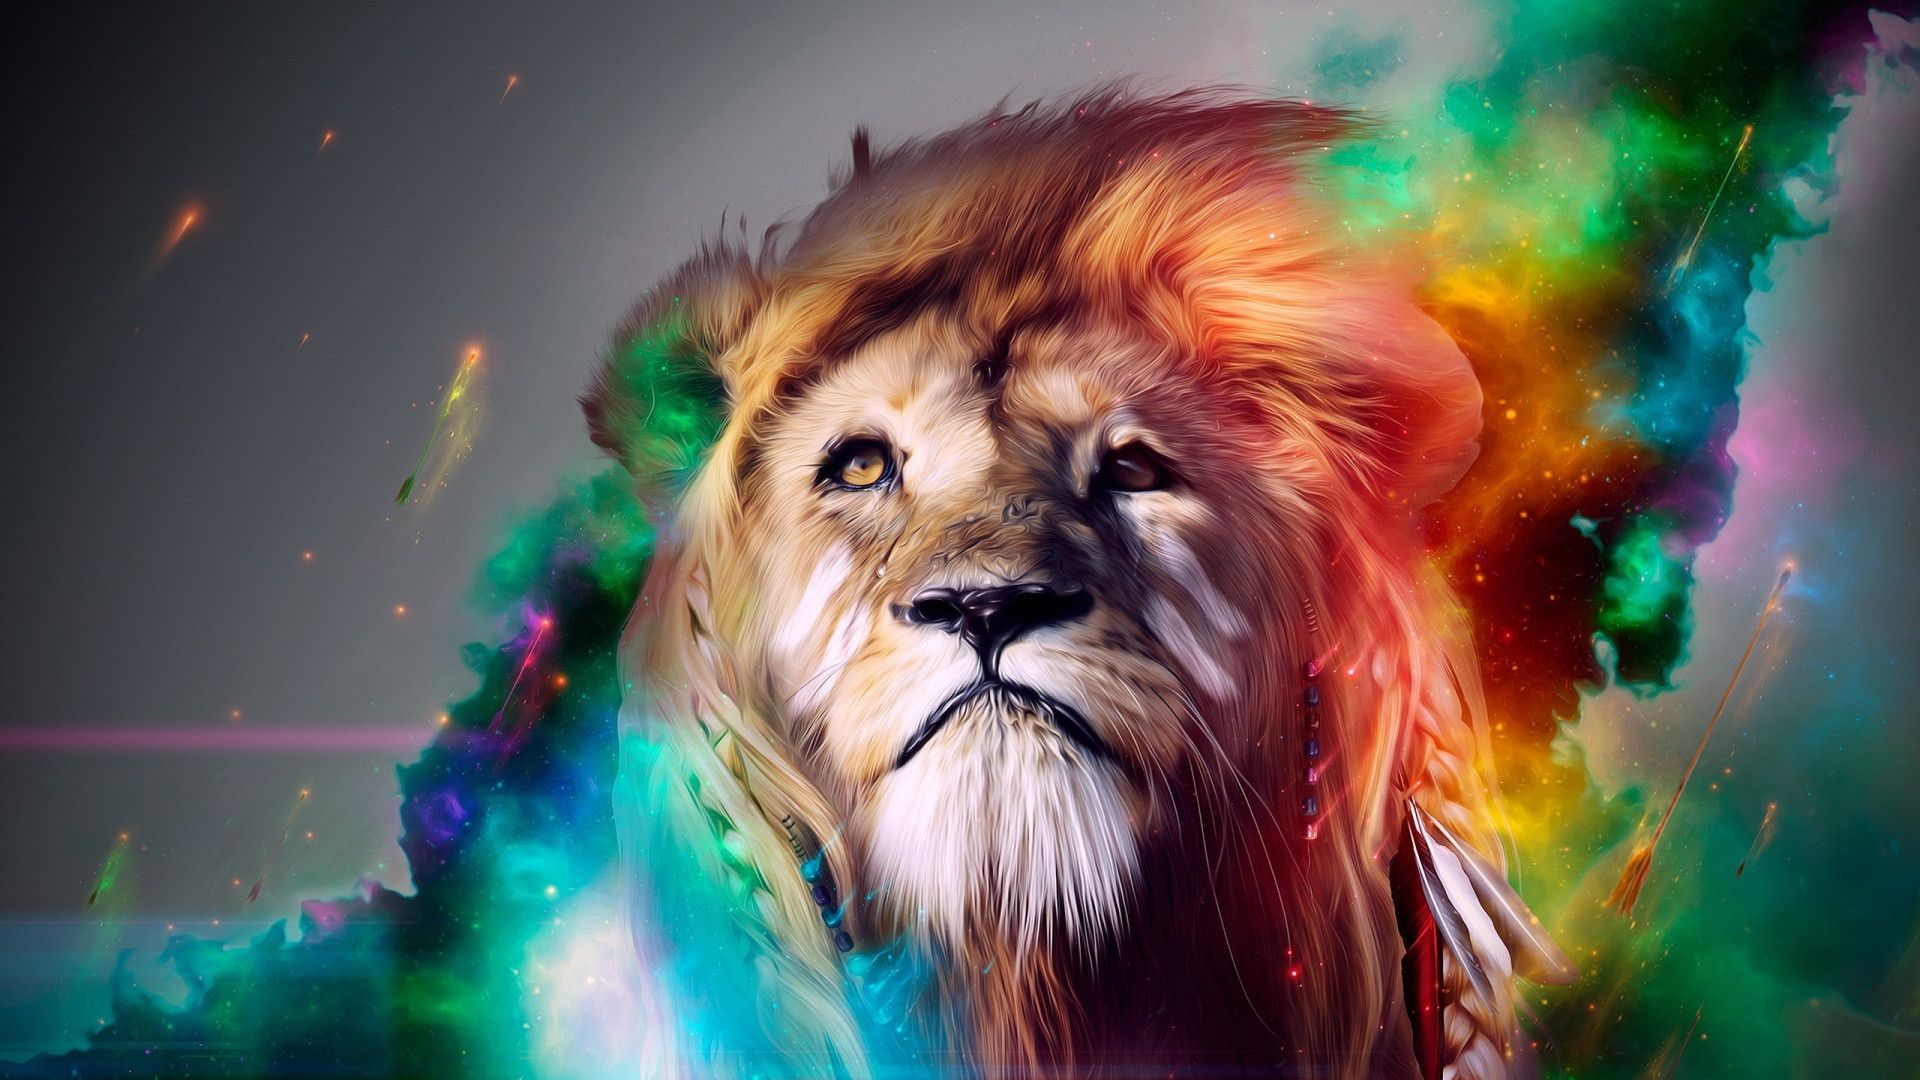 HD 1920 x 1080 Rainbow space lion Wallpaper Lion wallpaper